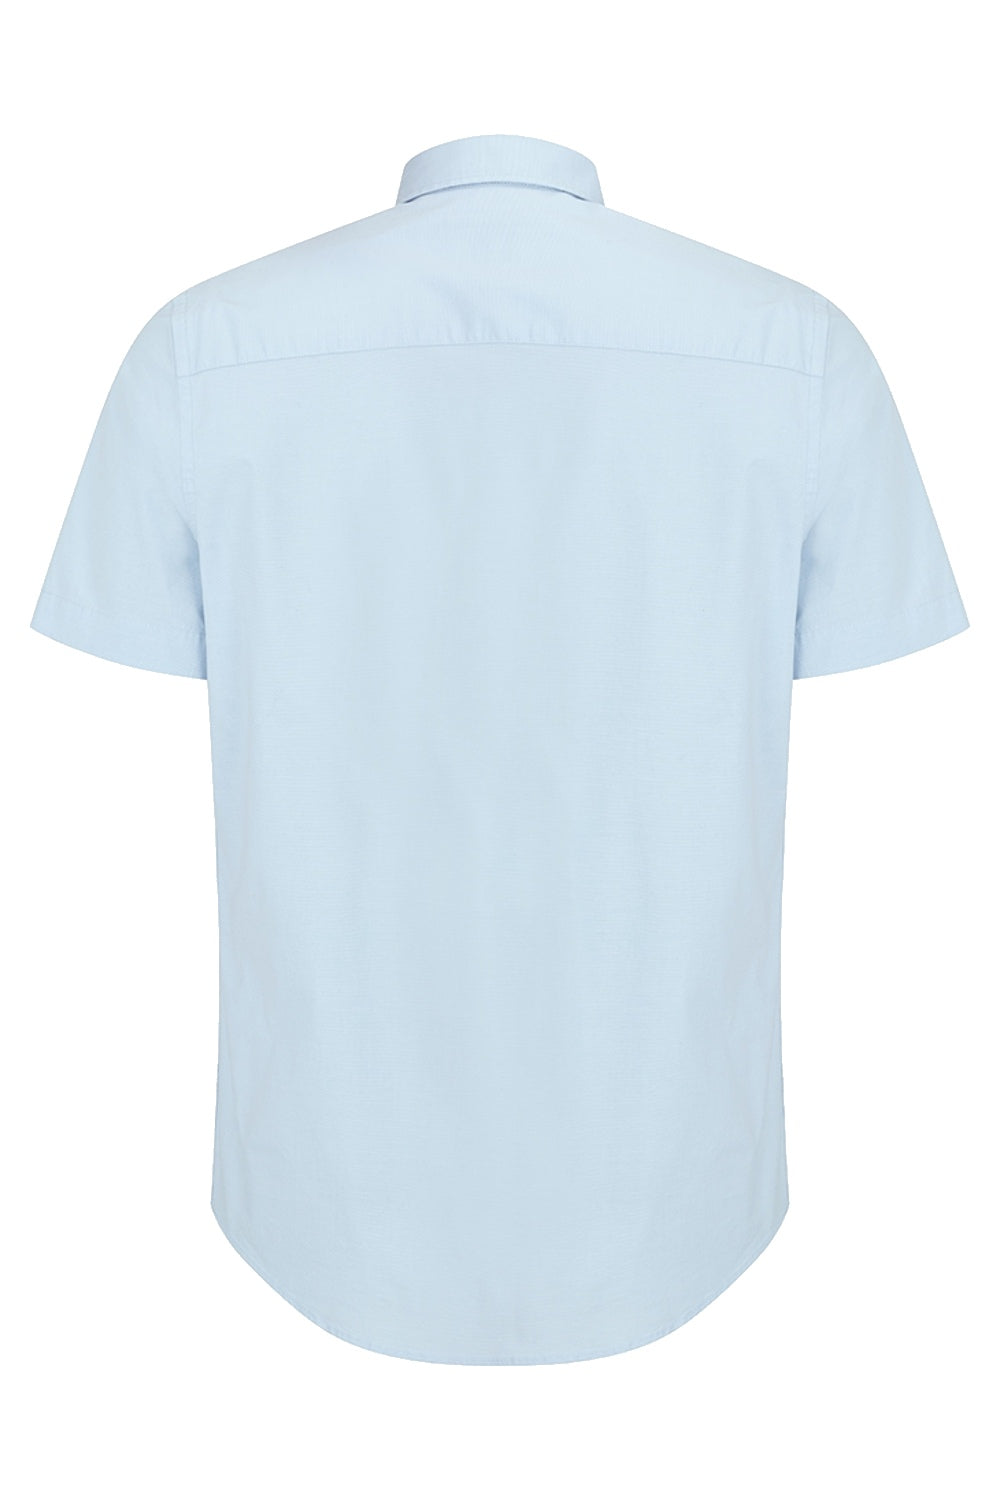 Hoggs of Fife Tolsta Short Sleeve Cotton Stretch Plain Shirt in Blue 